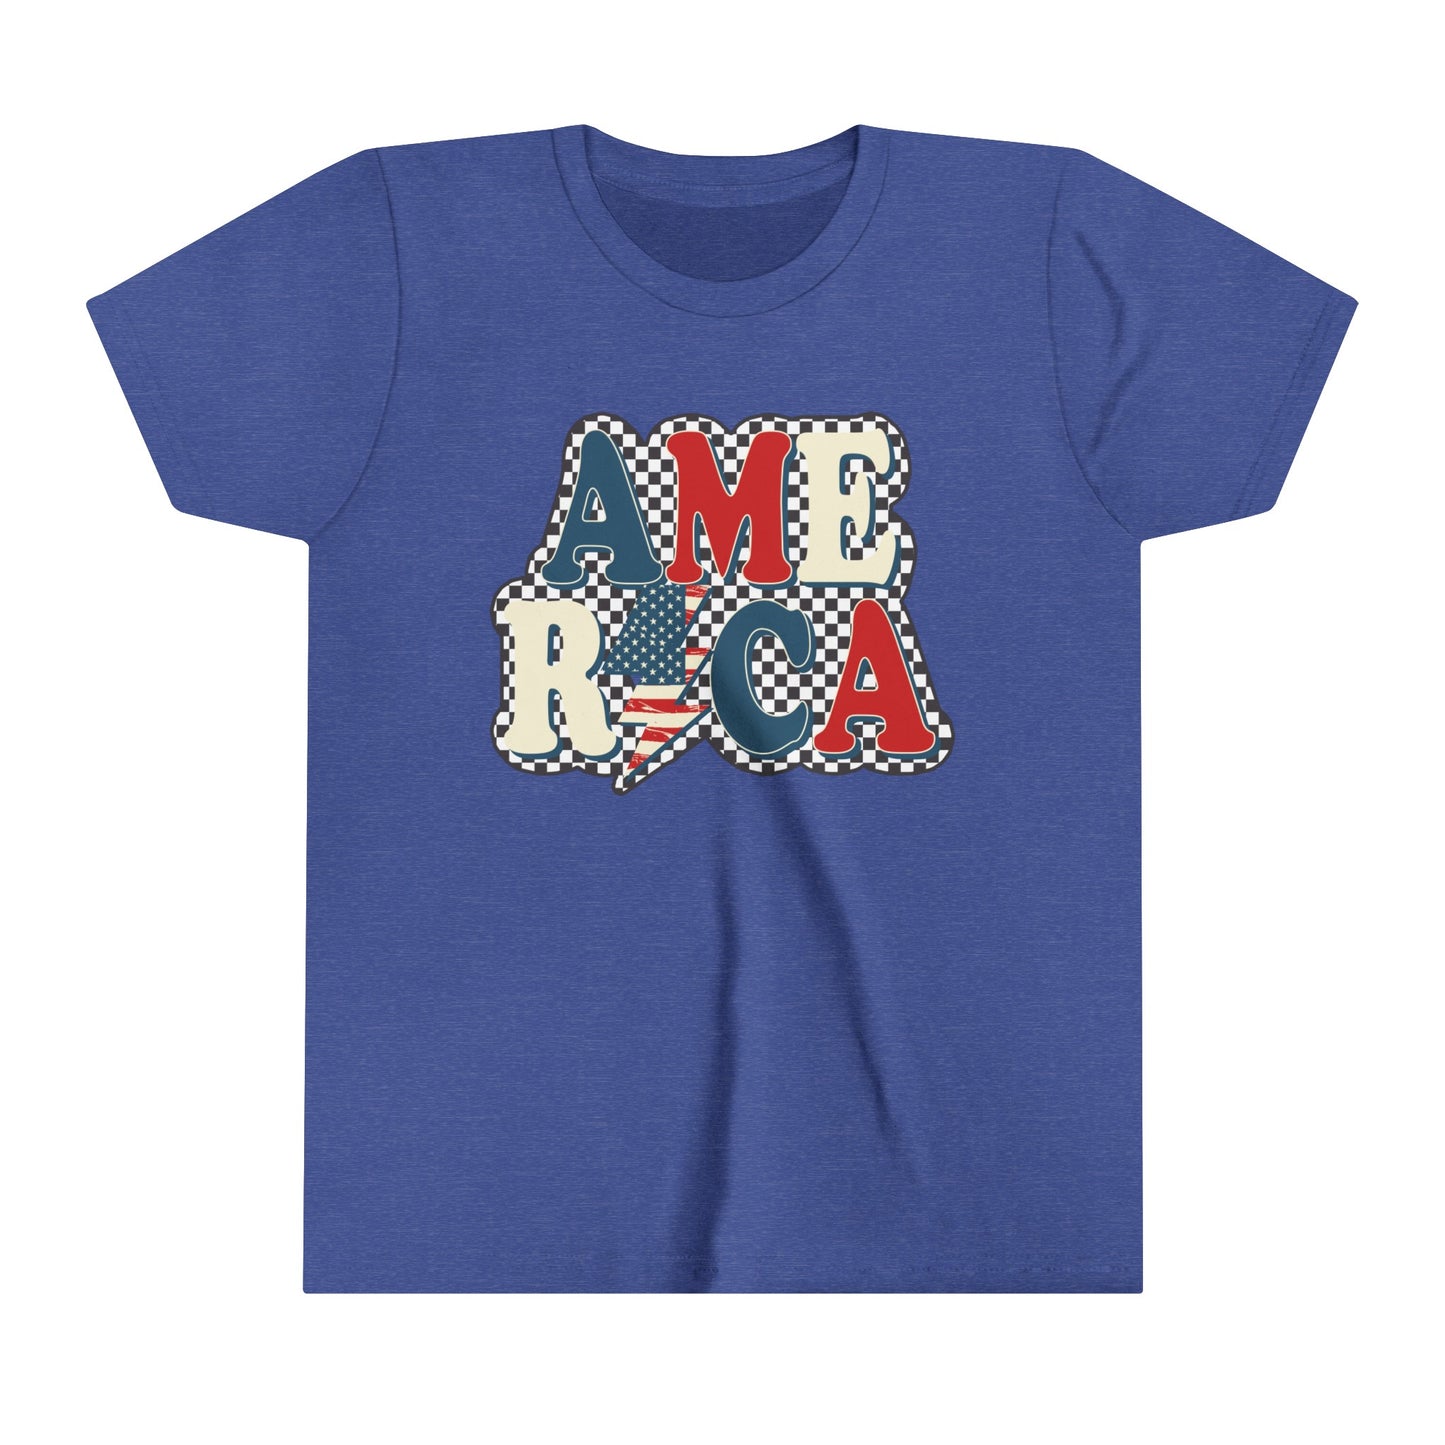 America Youth Shirt